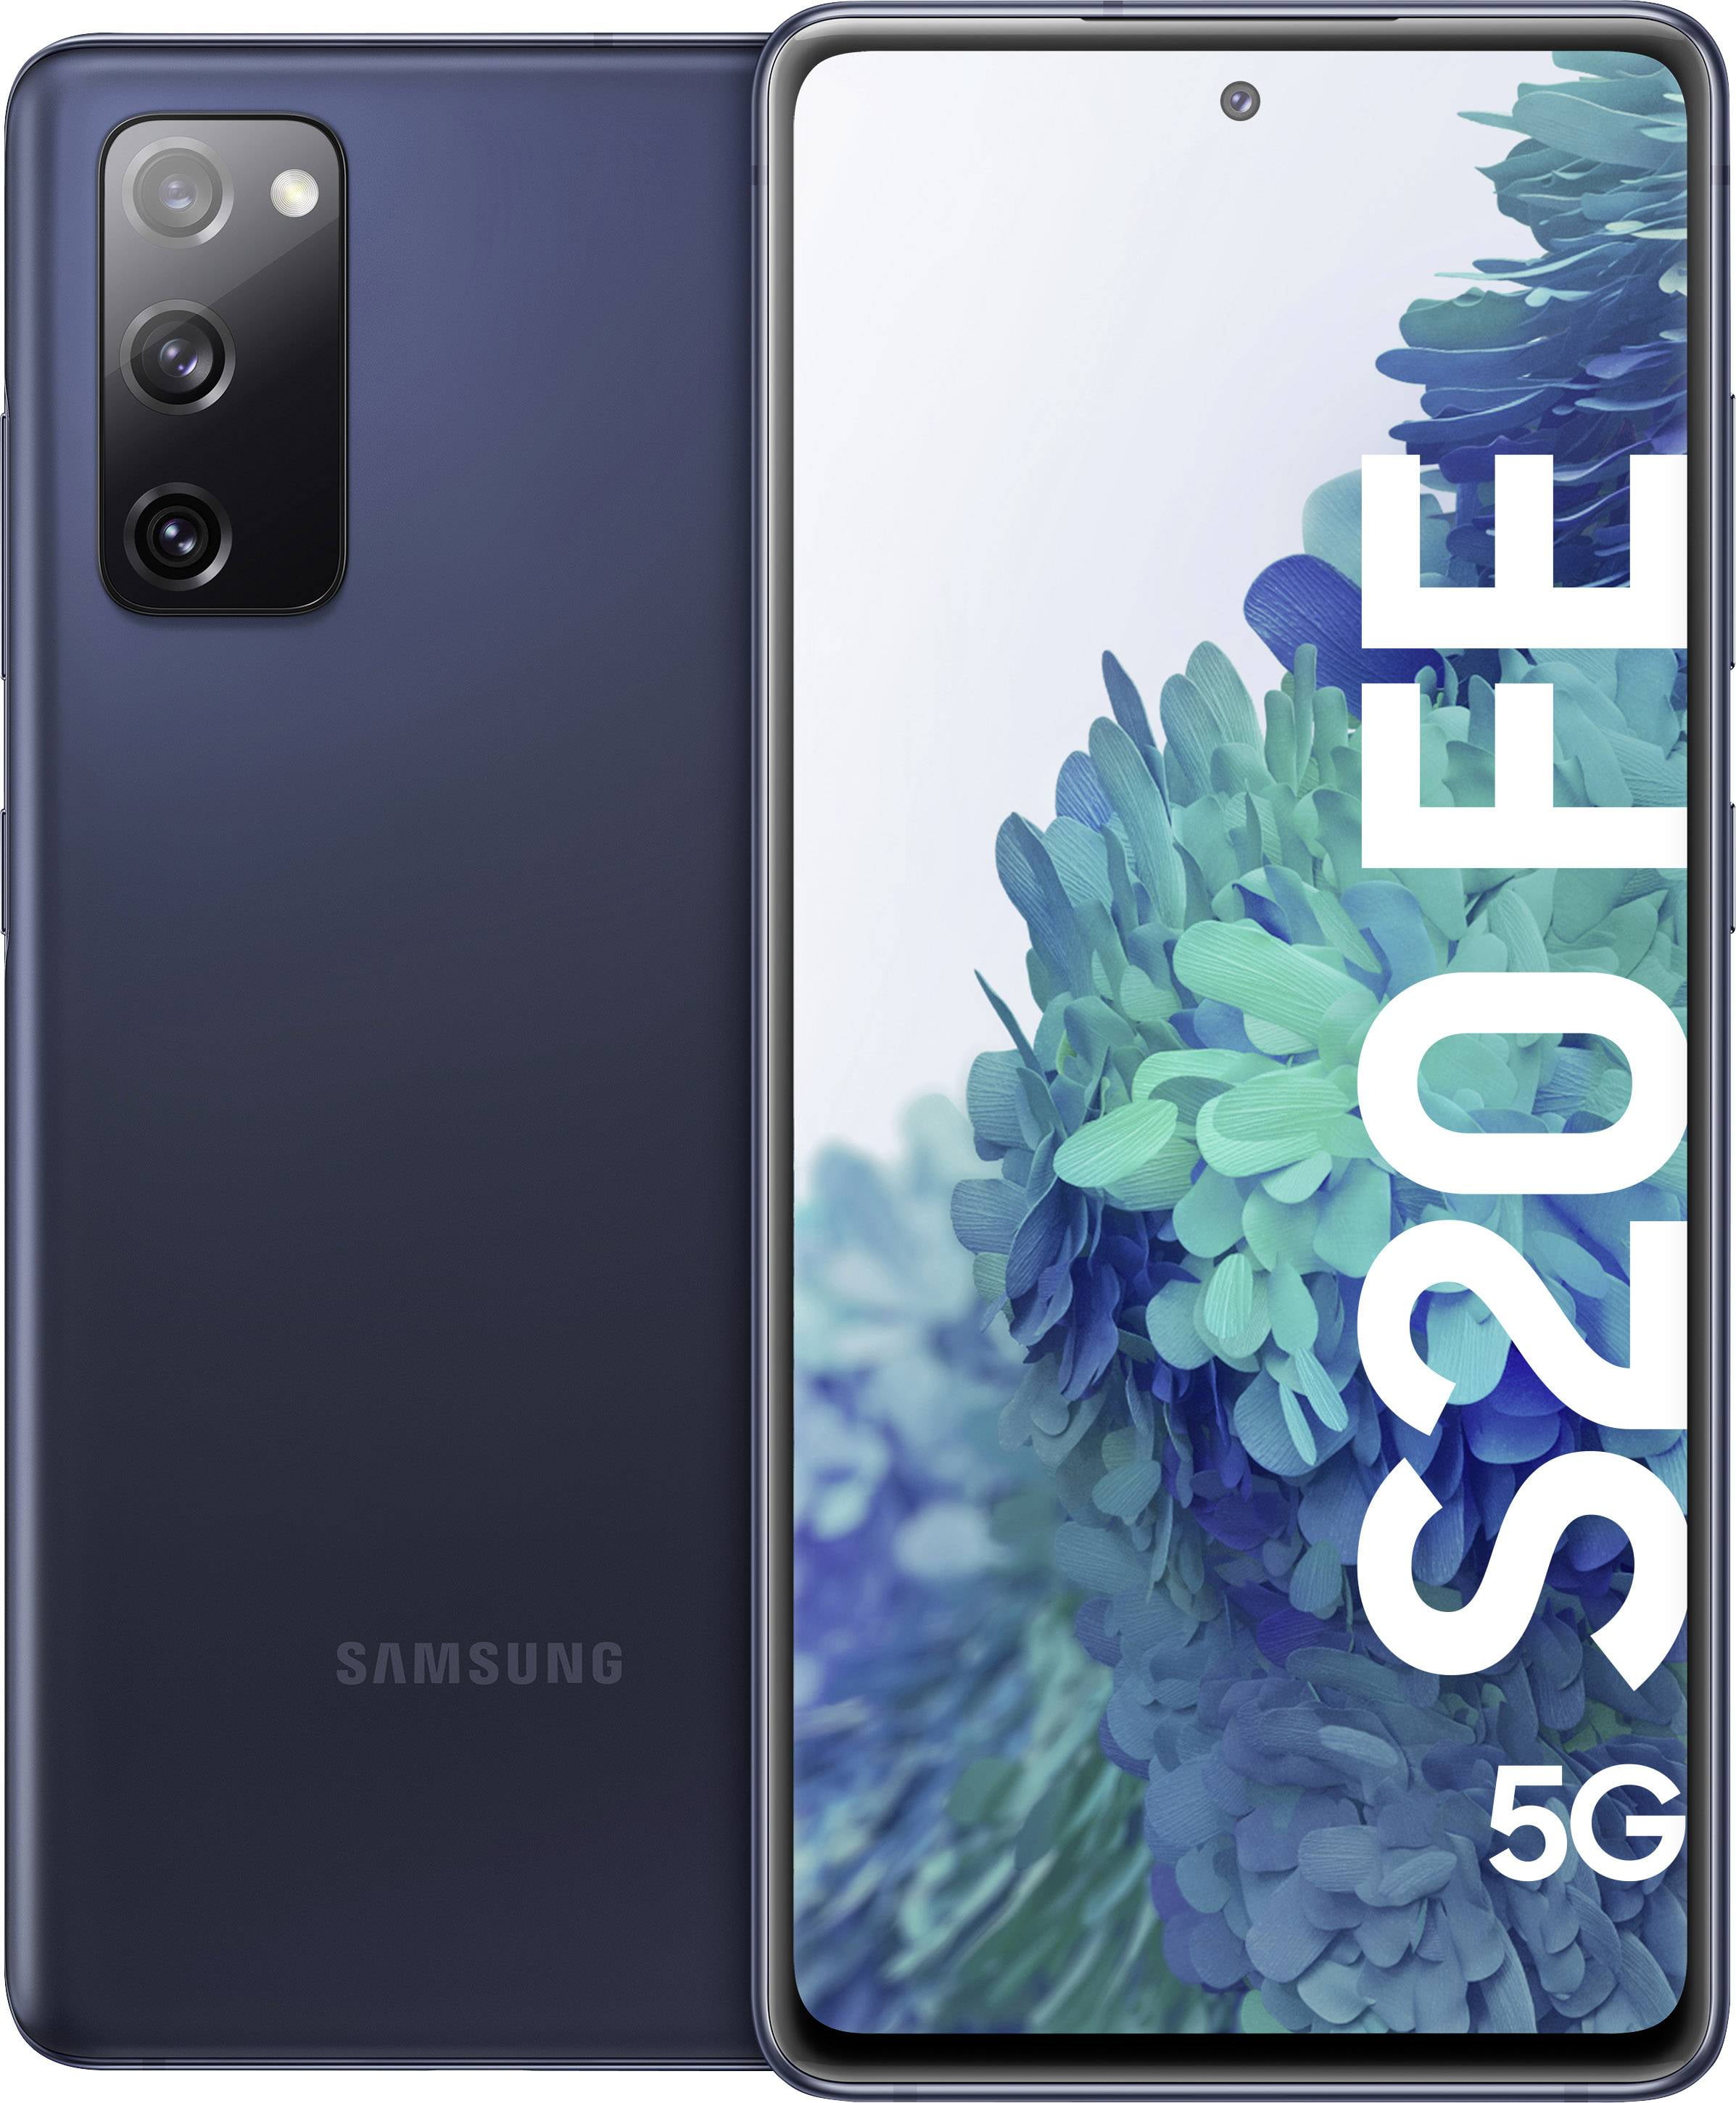 Samsung Galaxy S20 FE 5G Smartphone with Wireless PowerShare, 6GB RAM,  6.5, 5G, SIM Free, 128GB